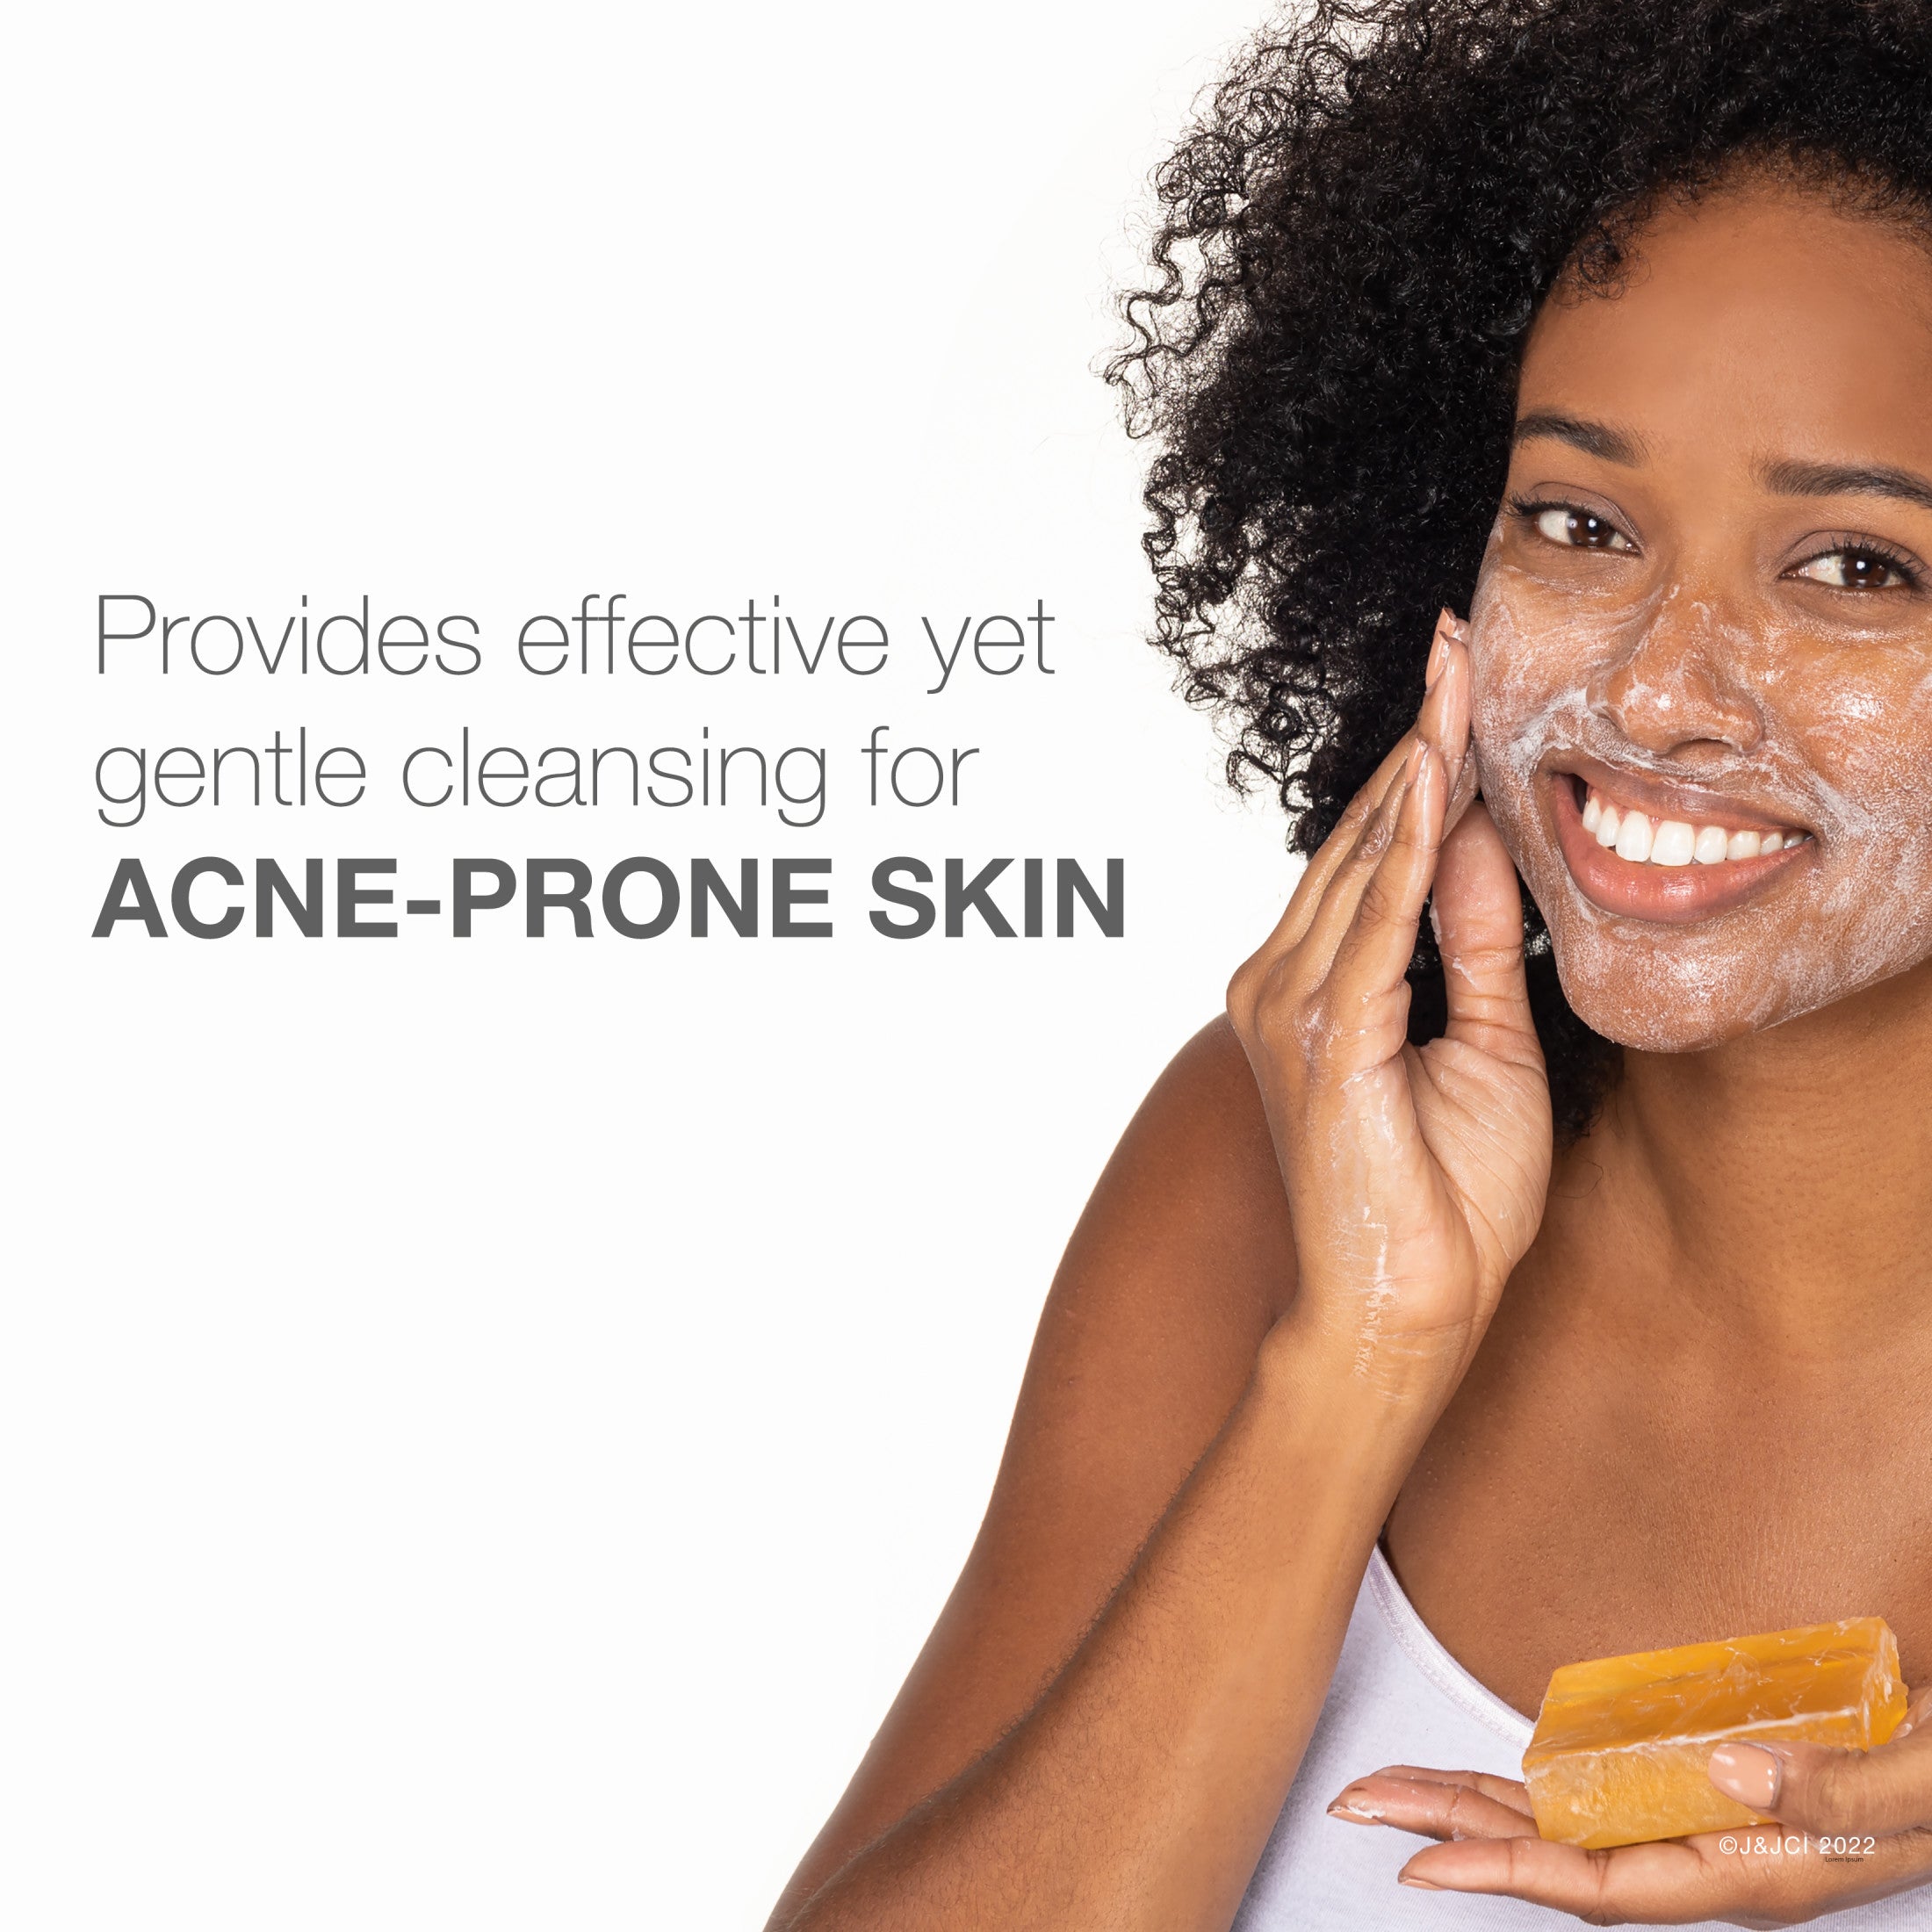 Neutrogena Glycerin Facial Cleansing Bar for Acne-Prone Skin, 3.5 oz | MTTS287